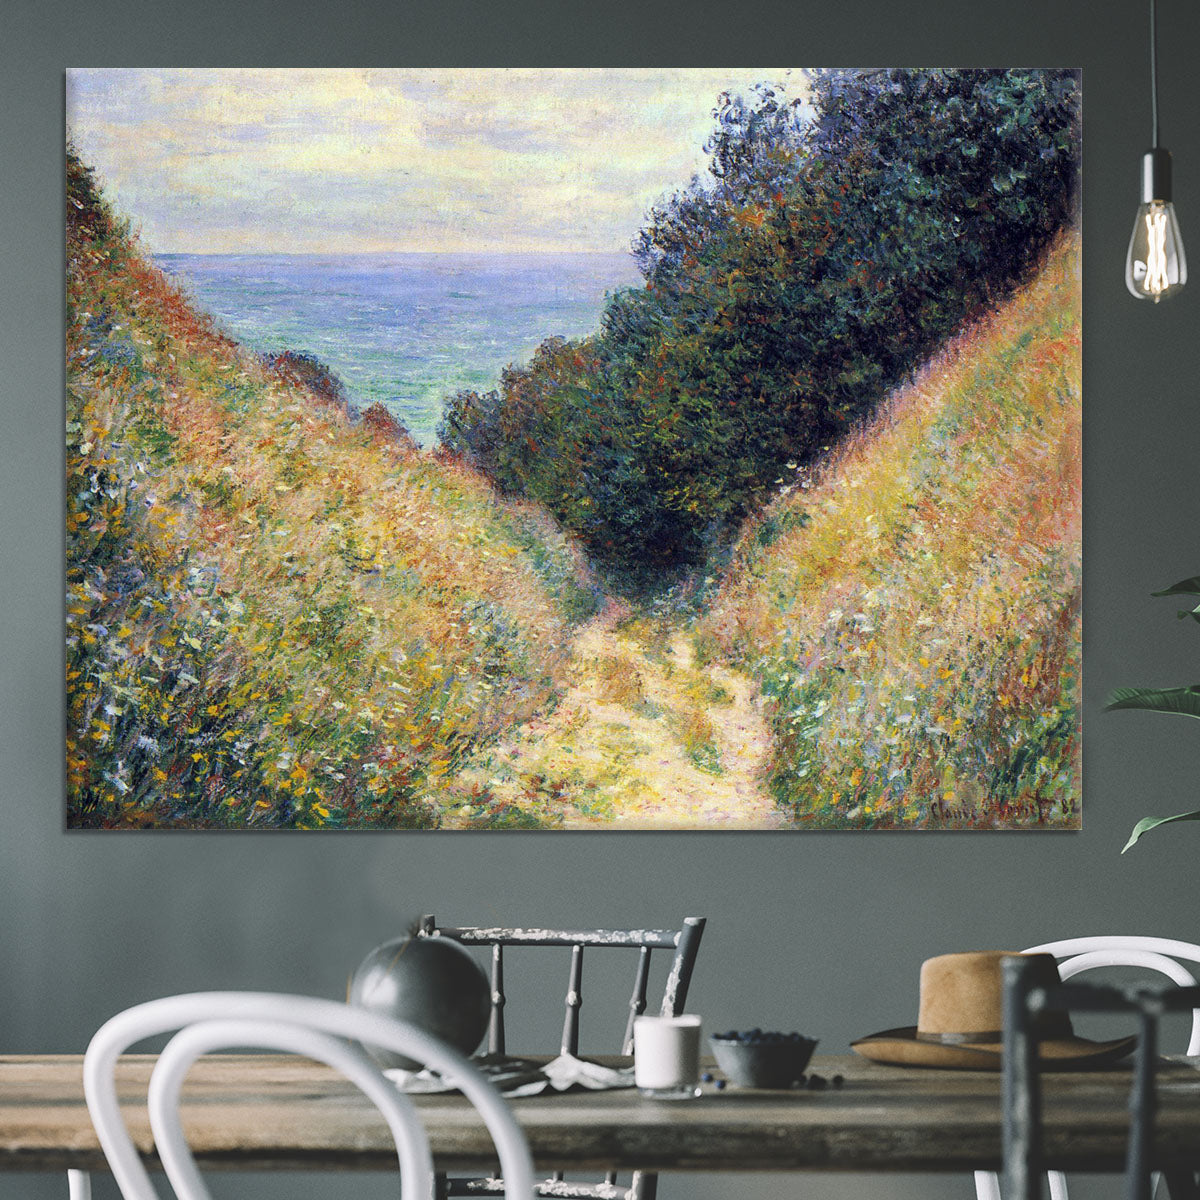 Pourville 1 by Monet Canvas Print or Poster - Canvas Art Rocks - 3